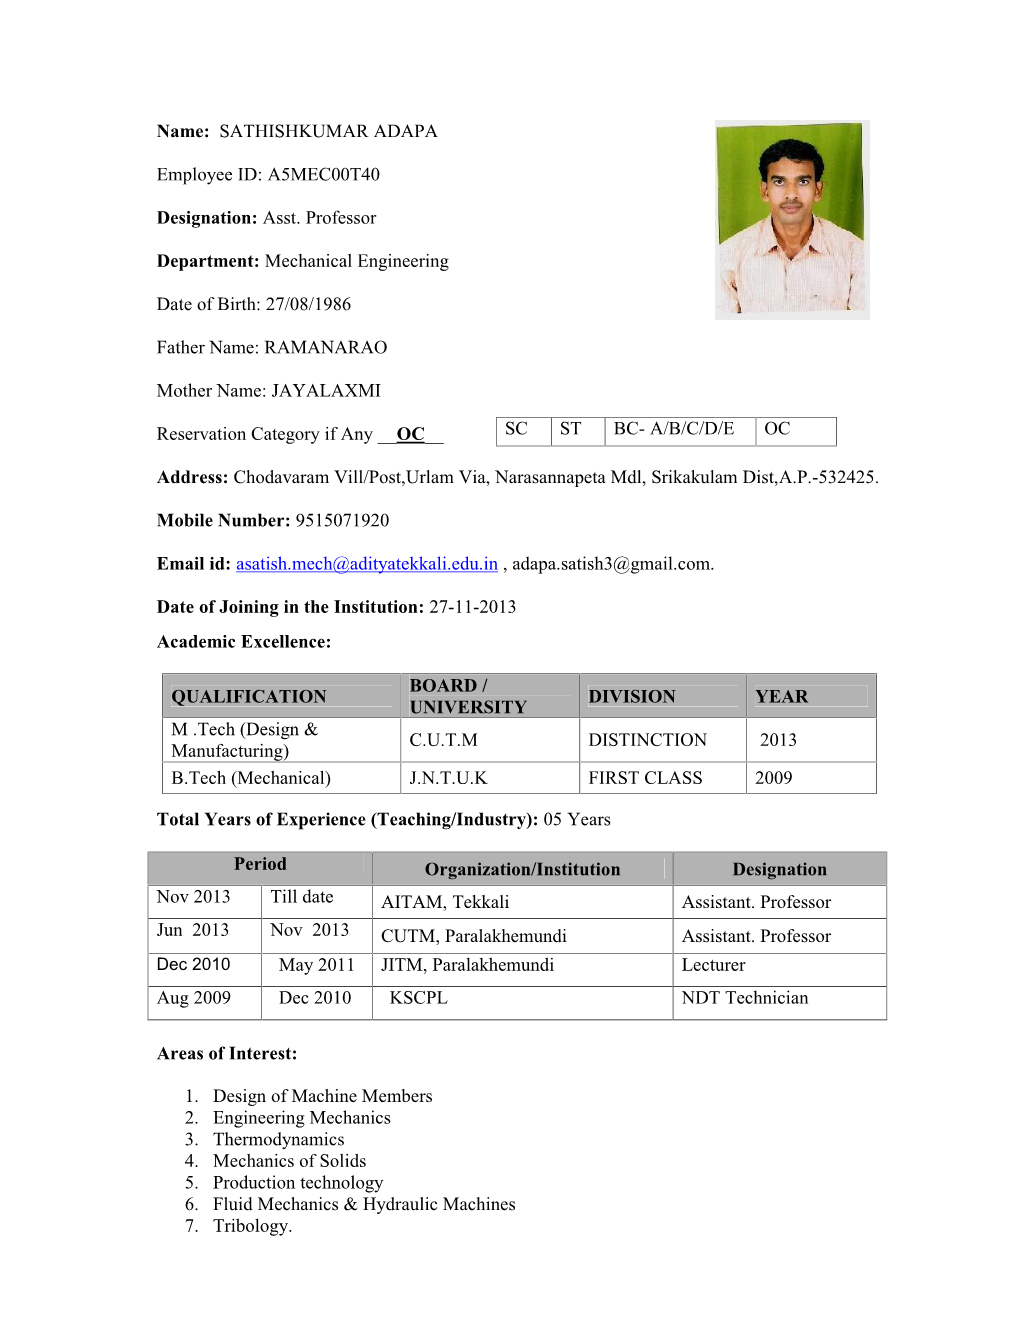 SATHISHKUMAR ADAPA Employee ID